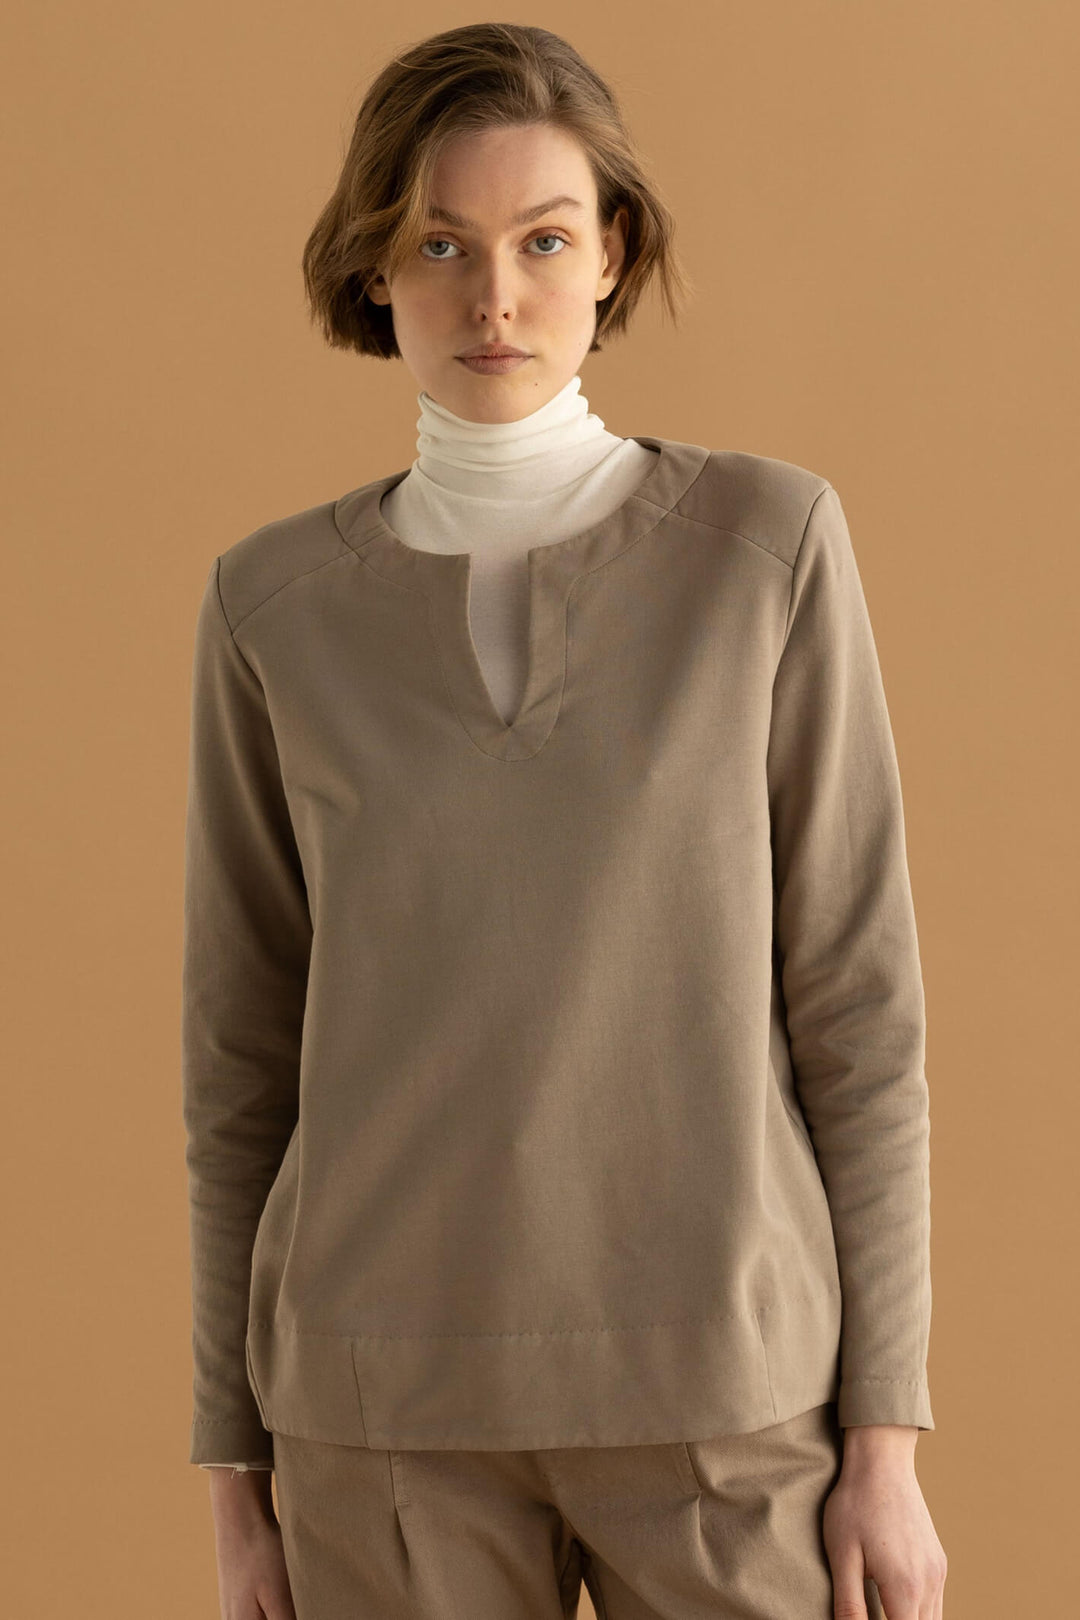 European Culture 49HO-2250-1388 Taupe Split Neck Long Sleeve Top - Olivia Grace Fashion